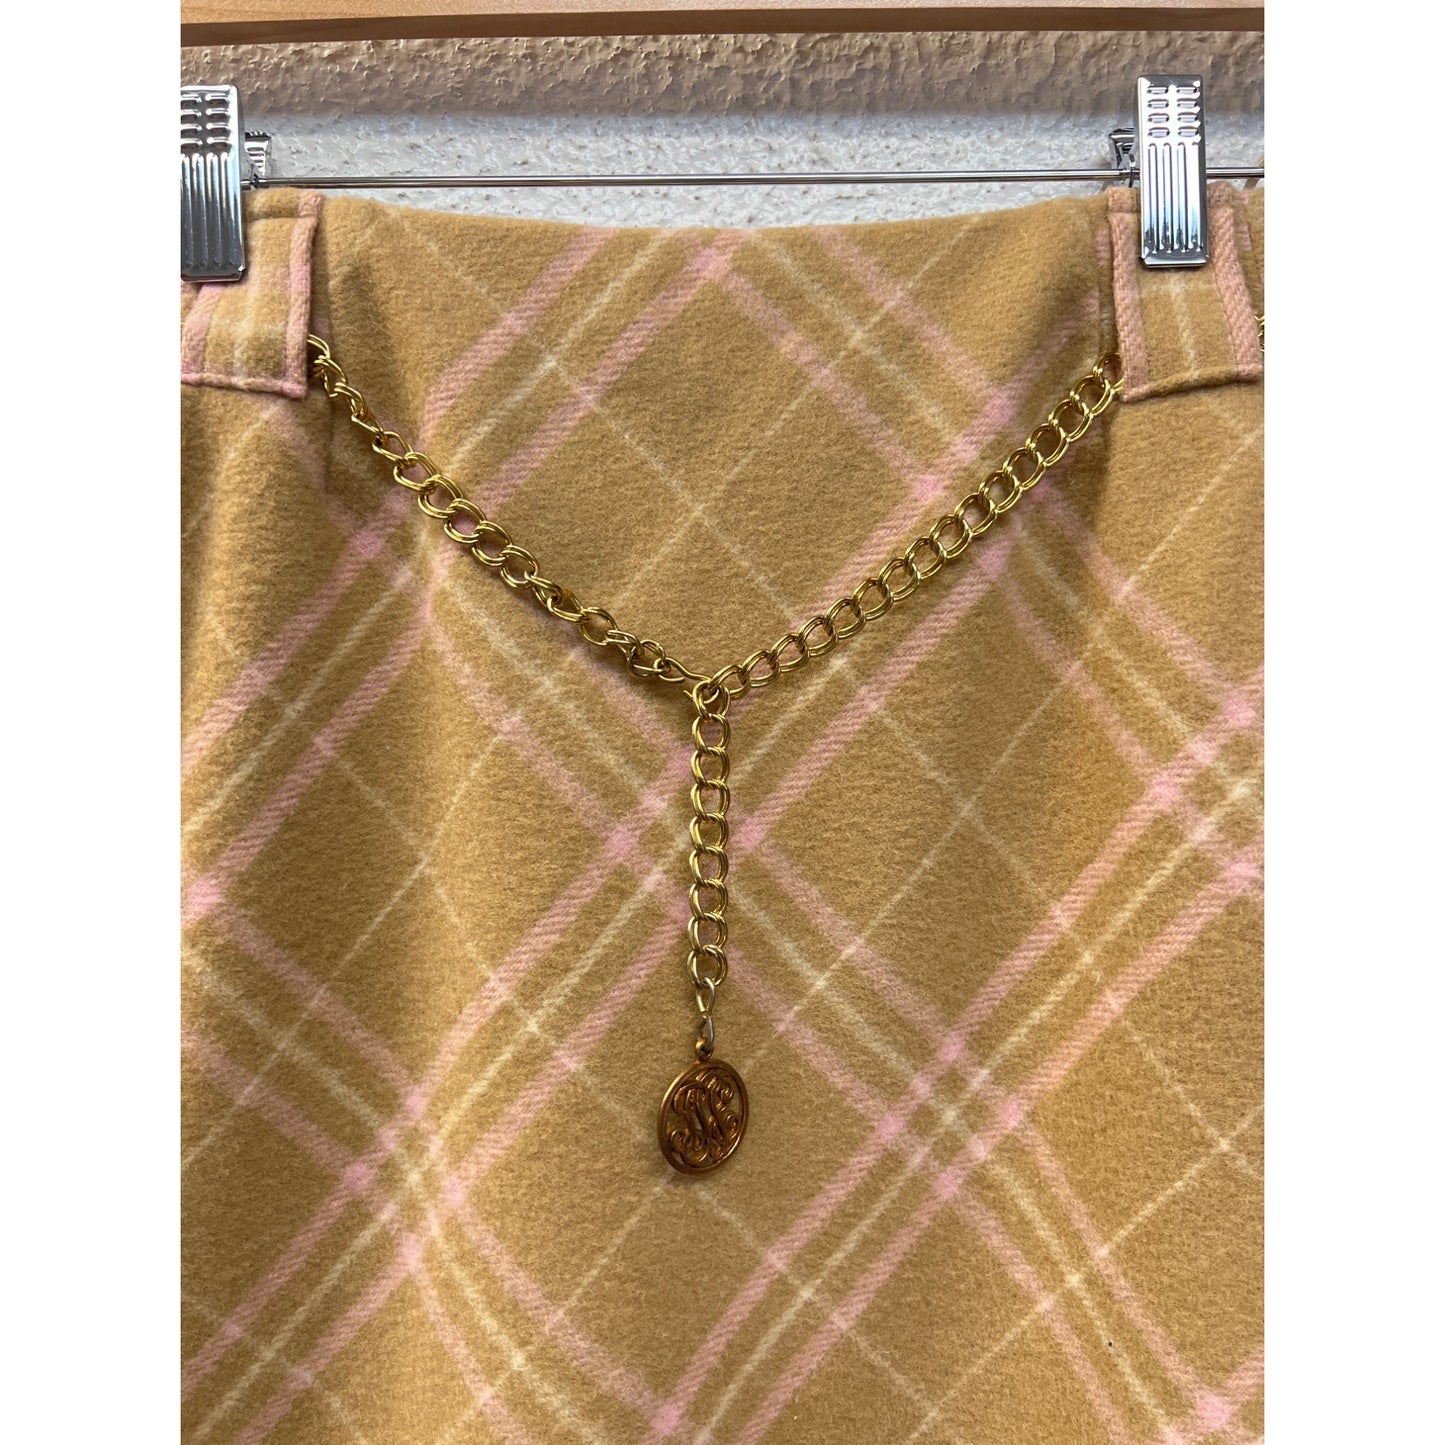 Bobbie Brooks Vintage 60's Tan & Pink Plaid Wool Skirt with Gold Chain Belt